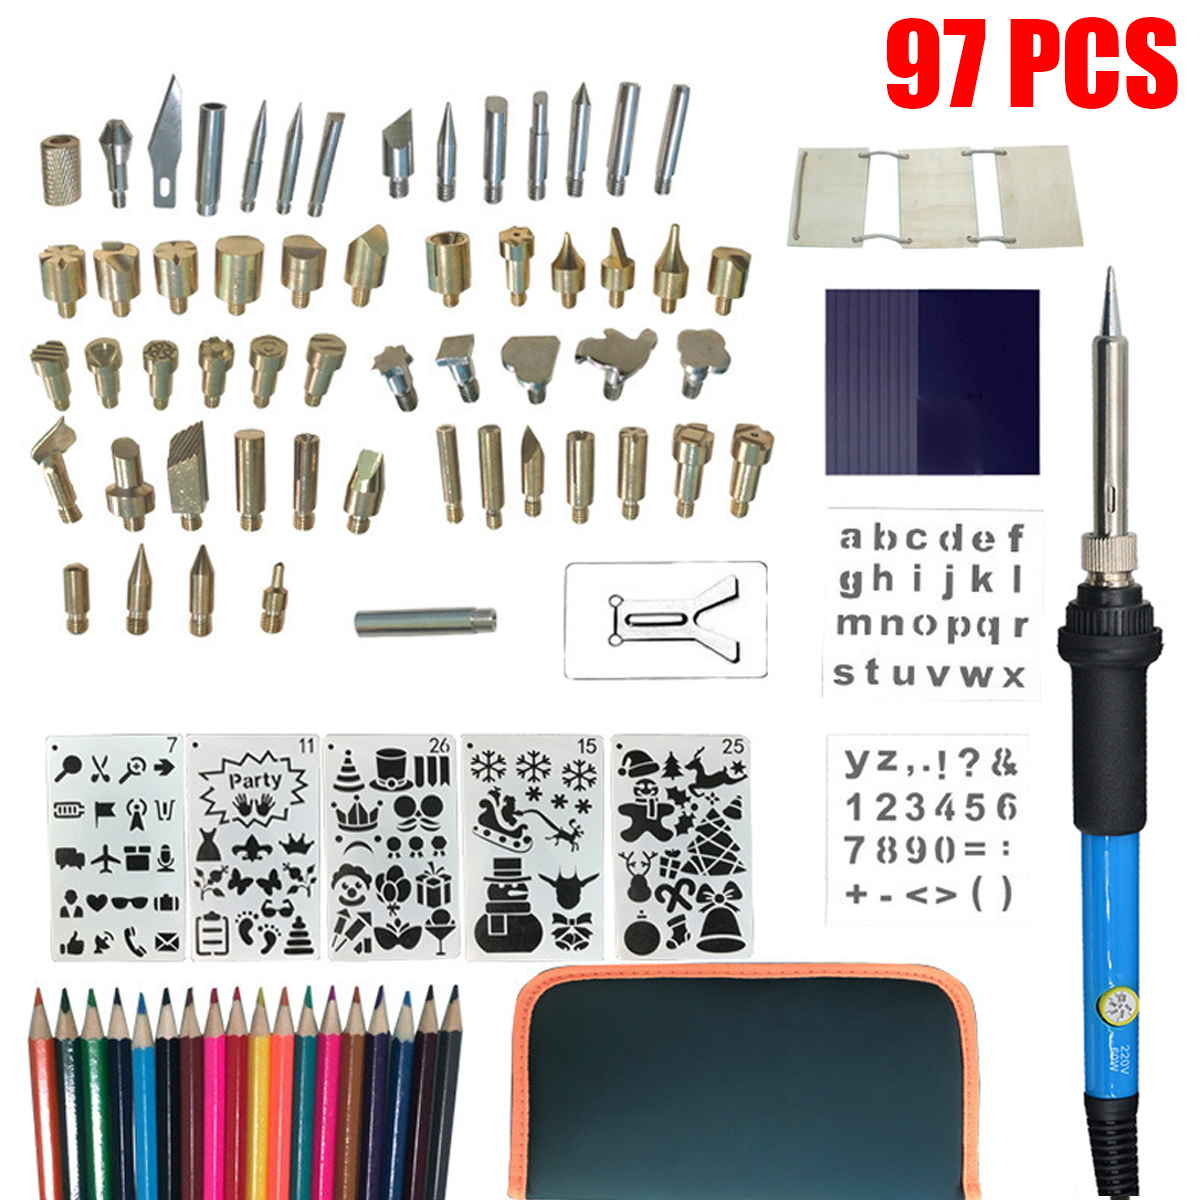 97-Pcs-110V240V-60W-DIY-Adjustable-Temperature-Electric-Soldering-Iron-Welding-Kit-1721594-1